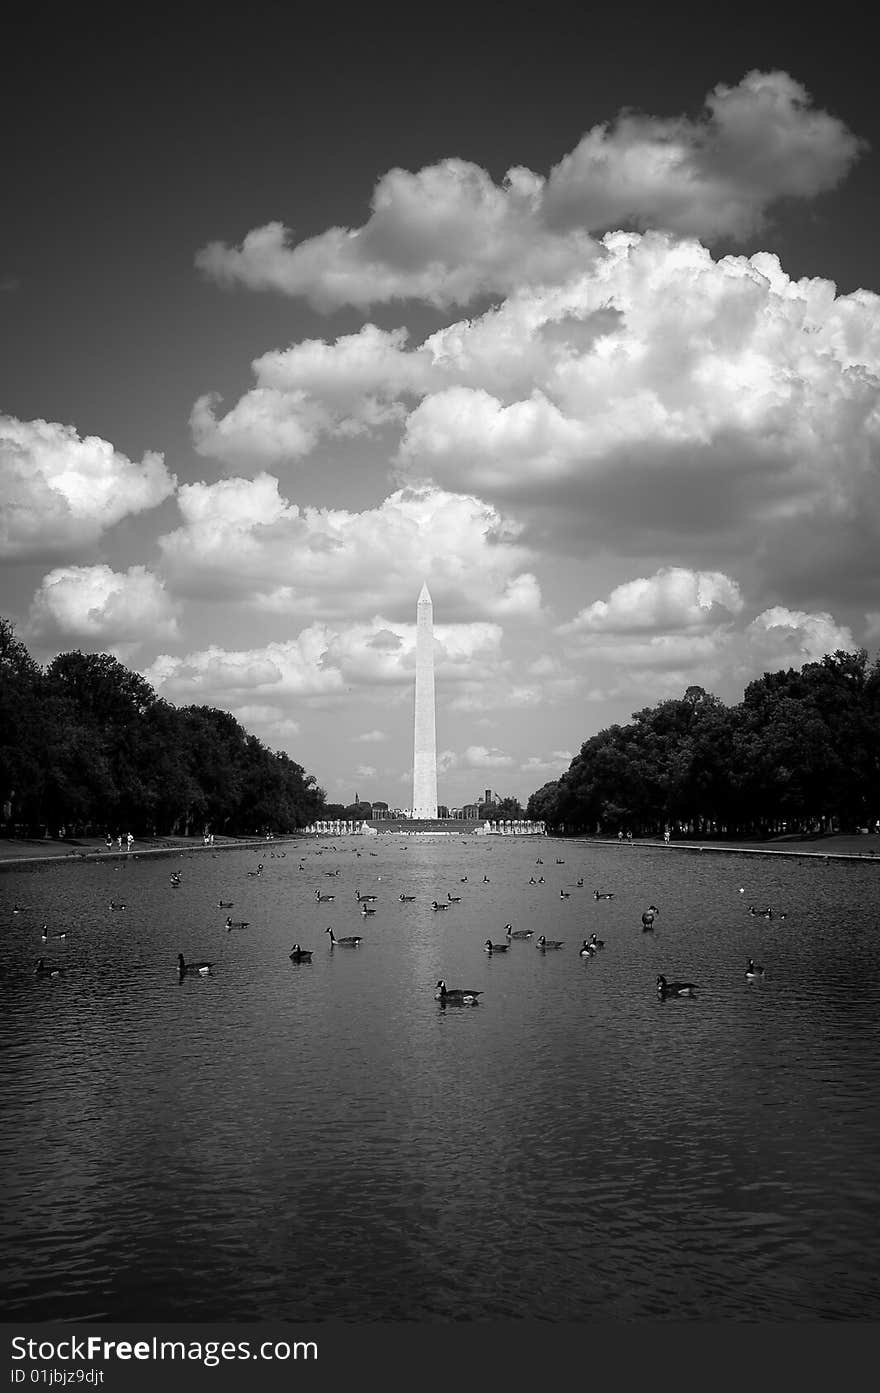 The George Washington memorial in Washington DC - 2008